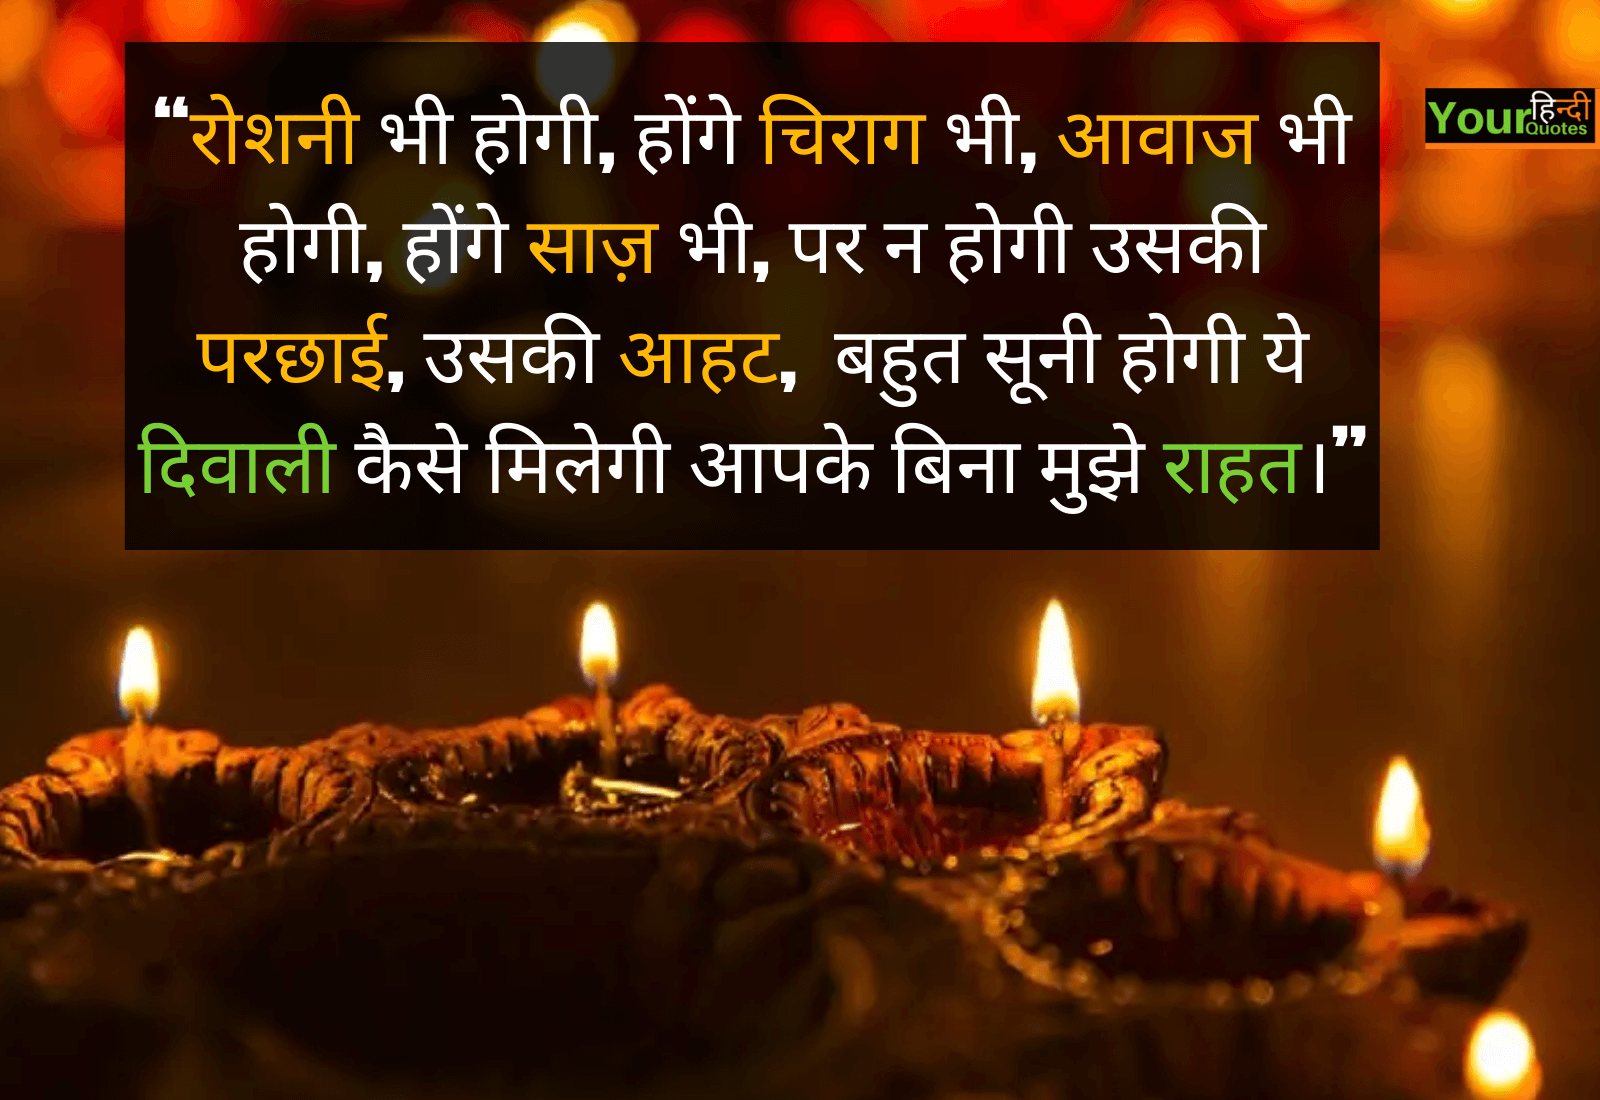 Happy Diwali in Hindi quotes Image